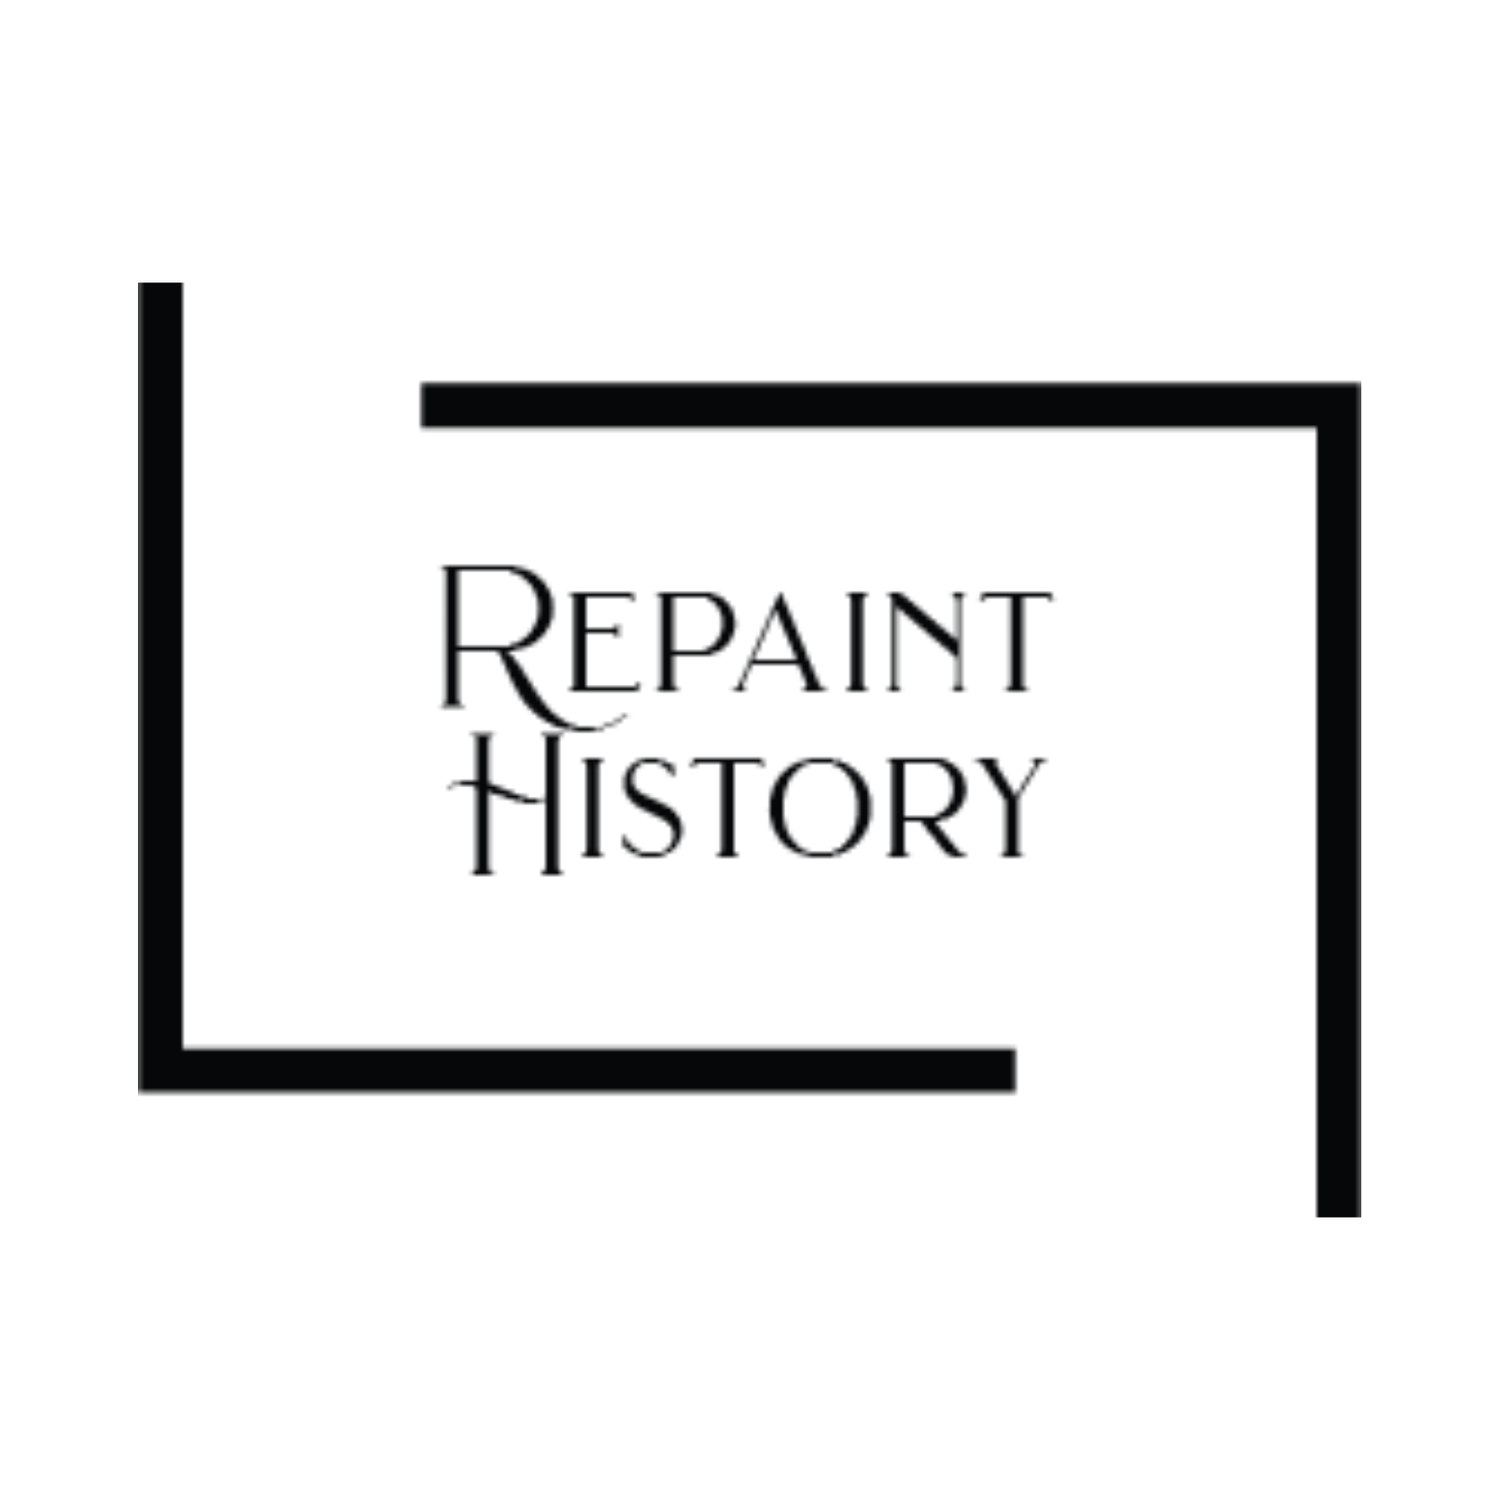 Repaint History Group